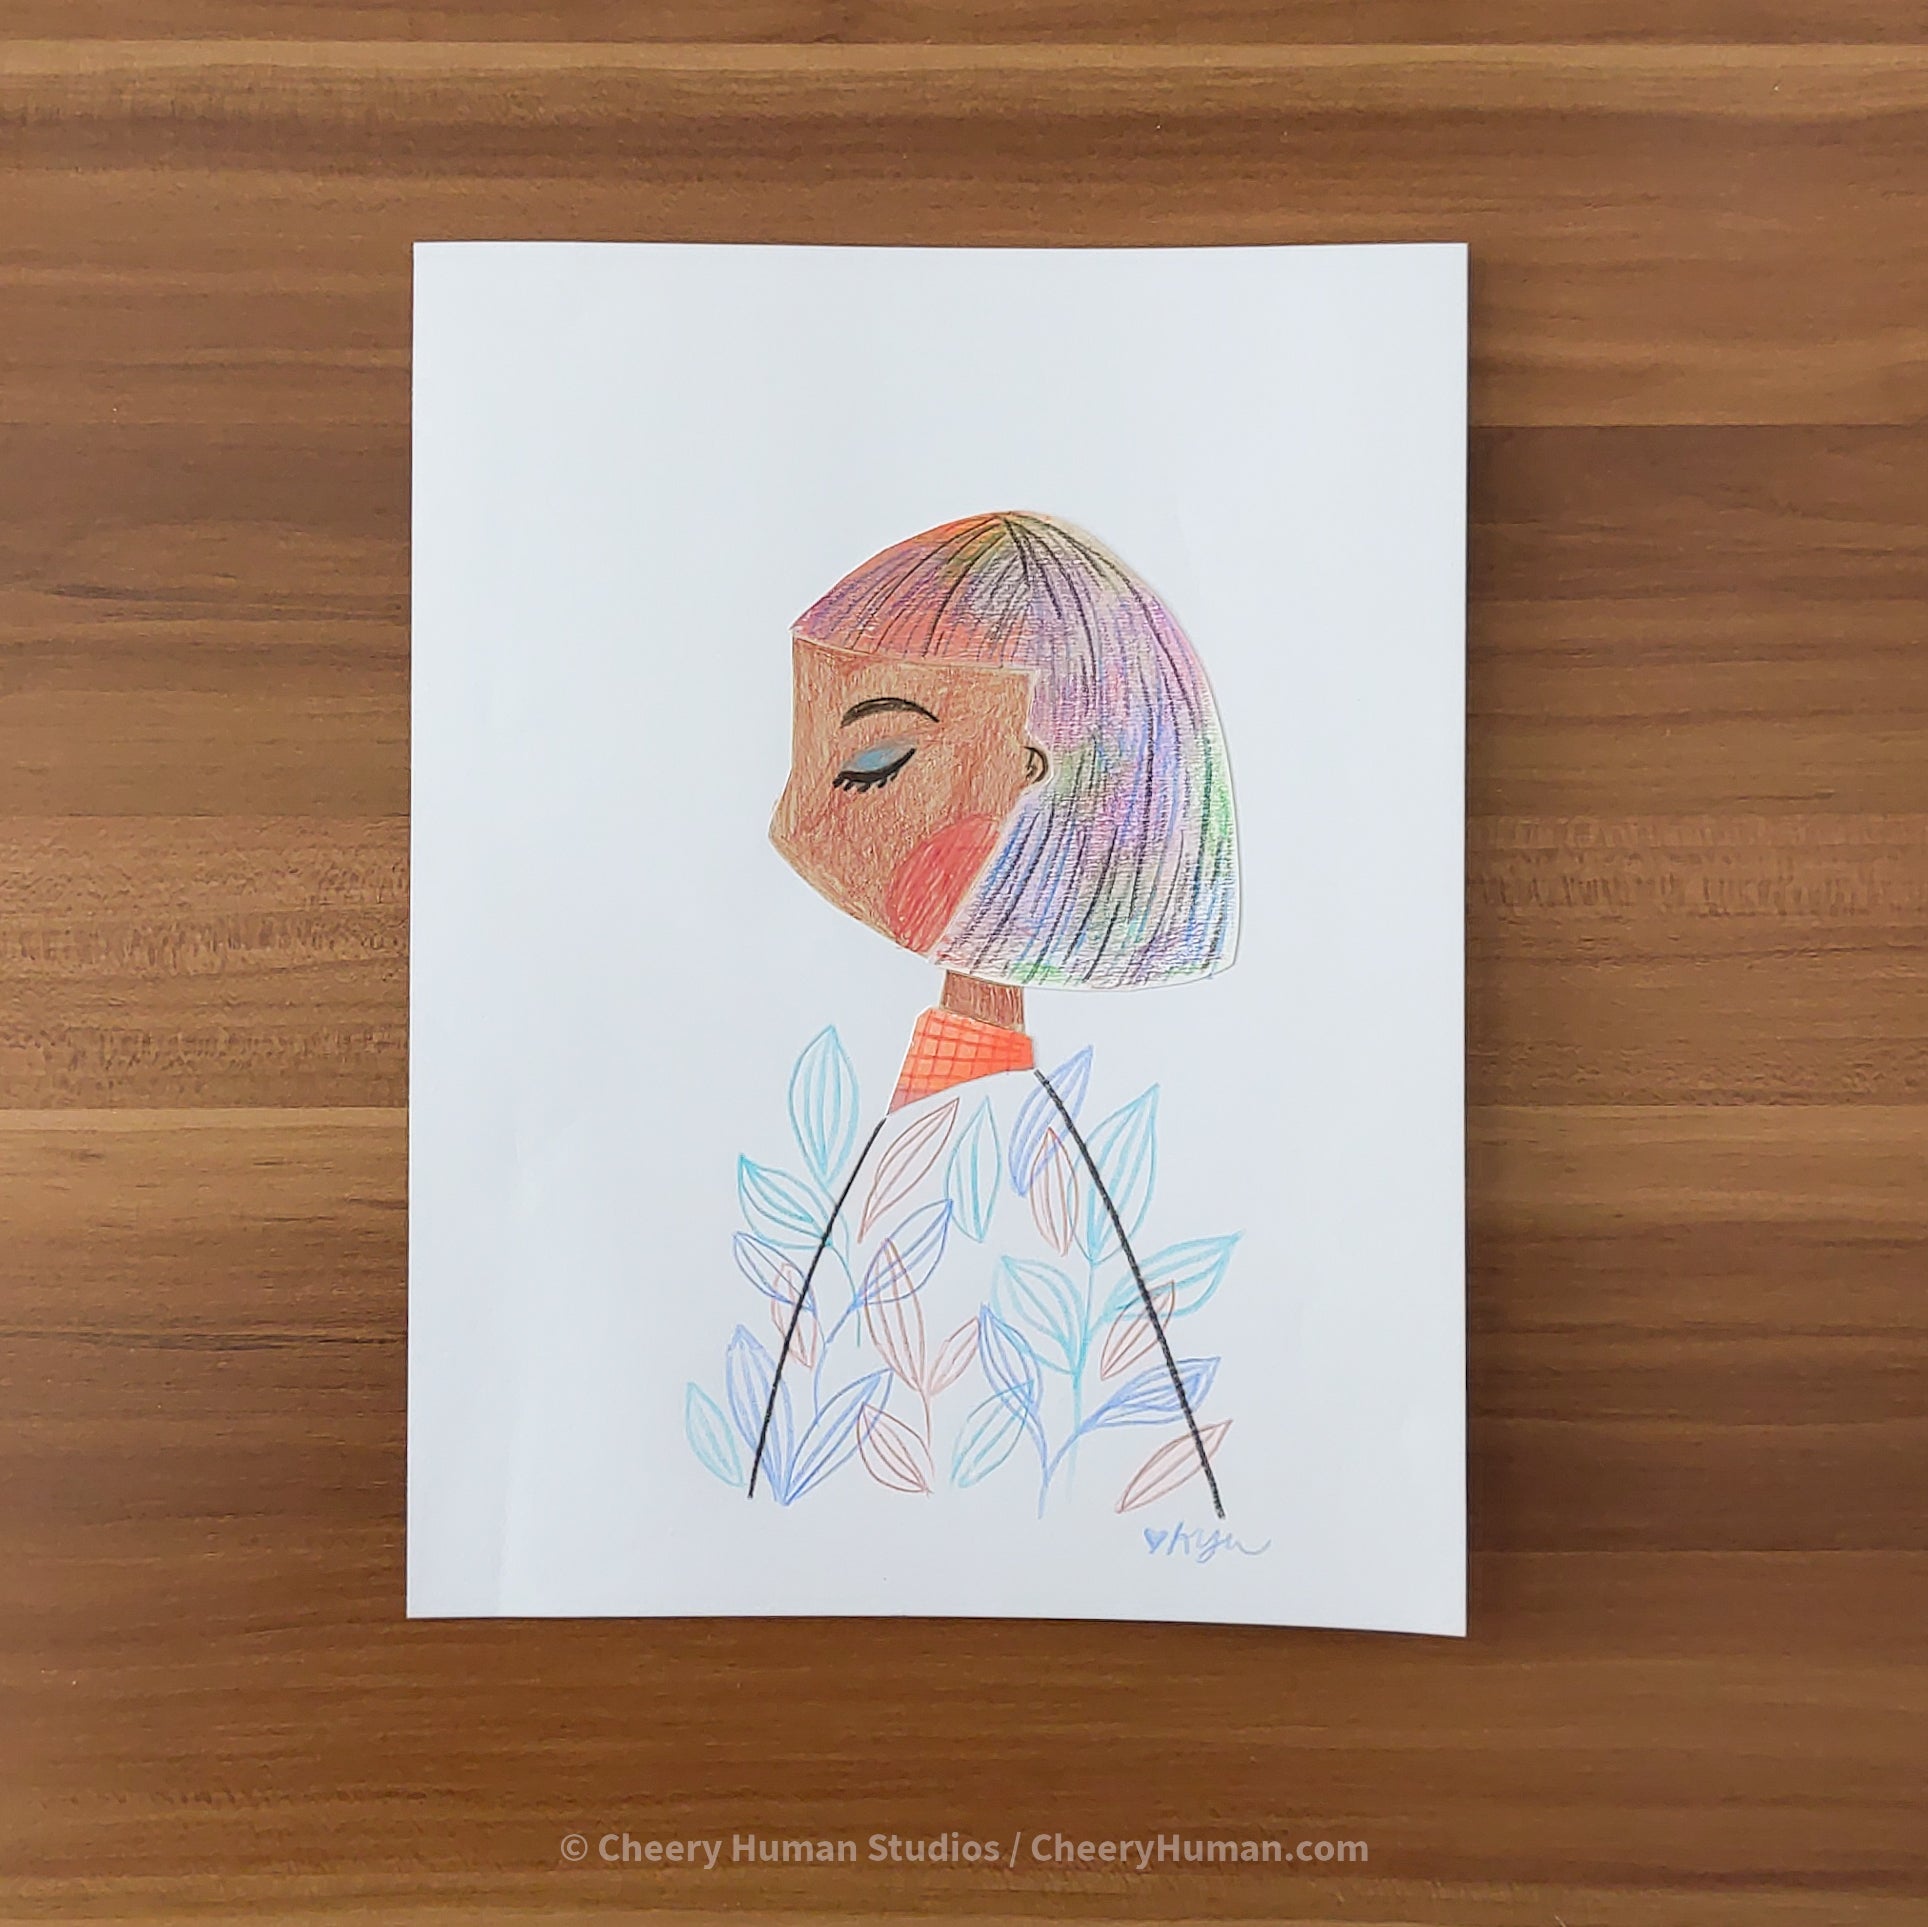 *PAPER ART ORIGINAL* Colorful Bob Woman - Original Paper Cut Artwork ✺ Watercolor - Acryla Gouache - Colored Pencil Art